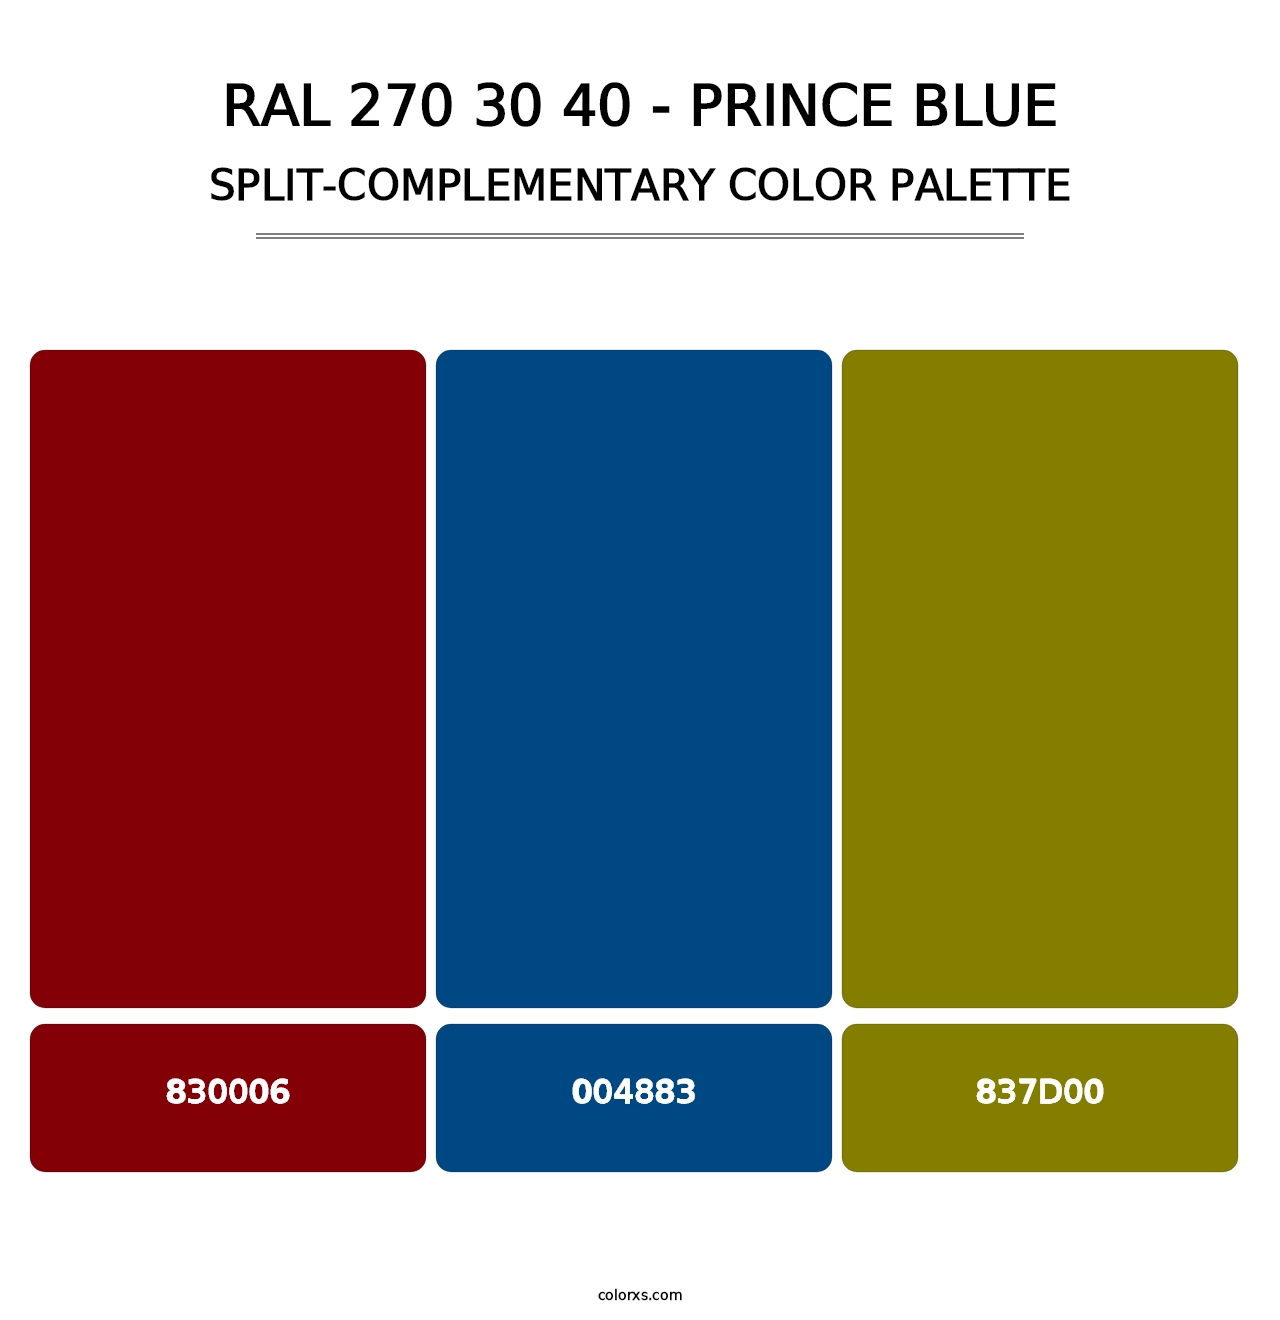 RAL 270 30 40 - Prince Blue - Split-Complementary Color Palette